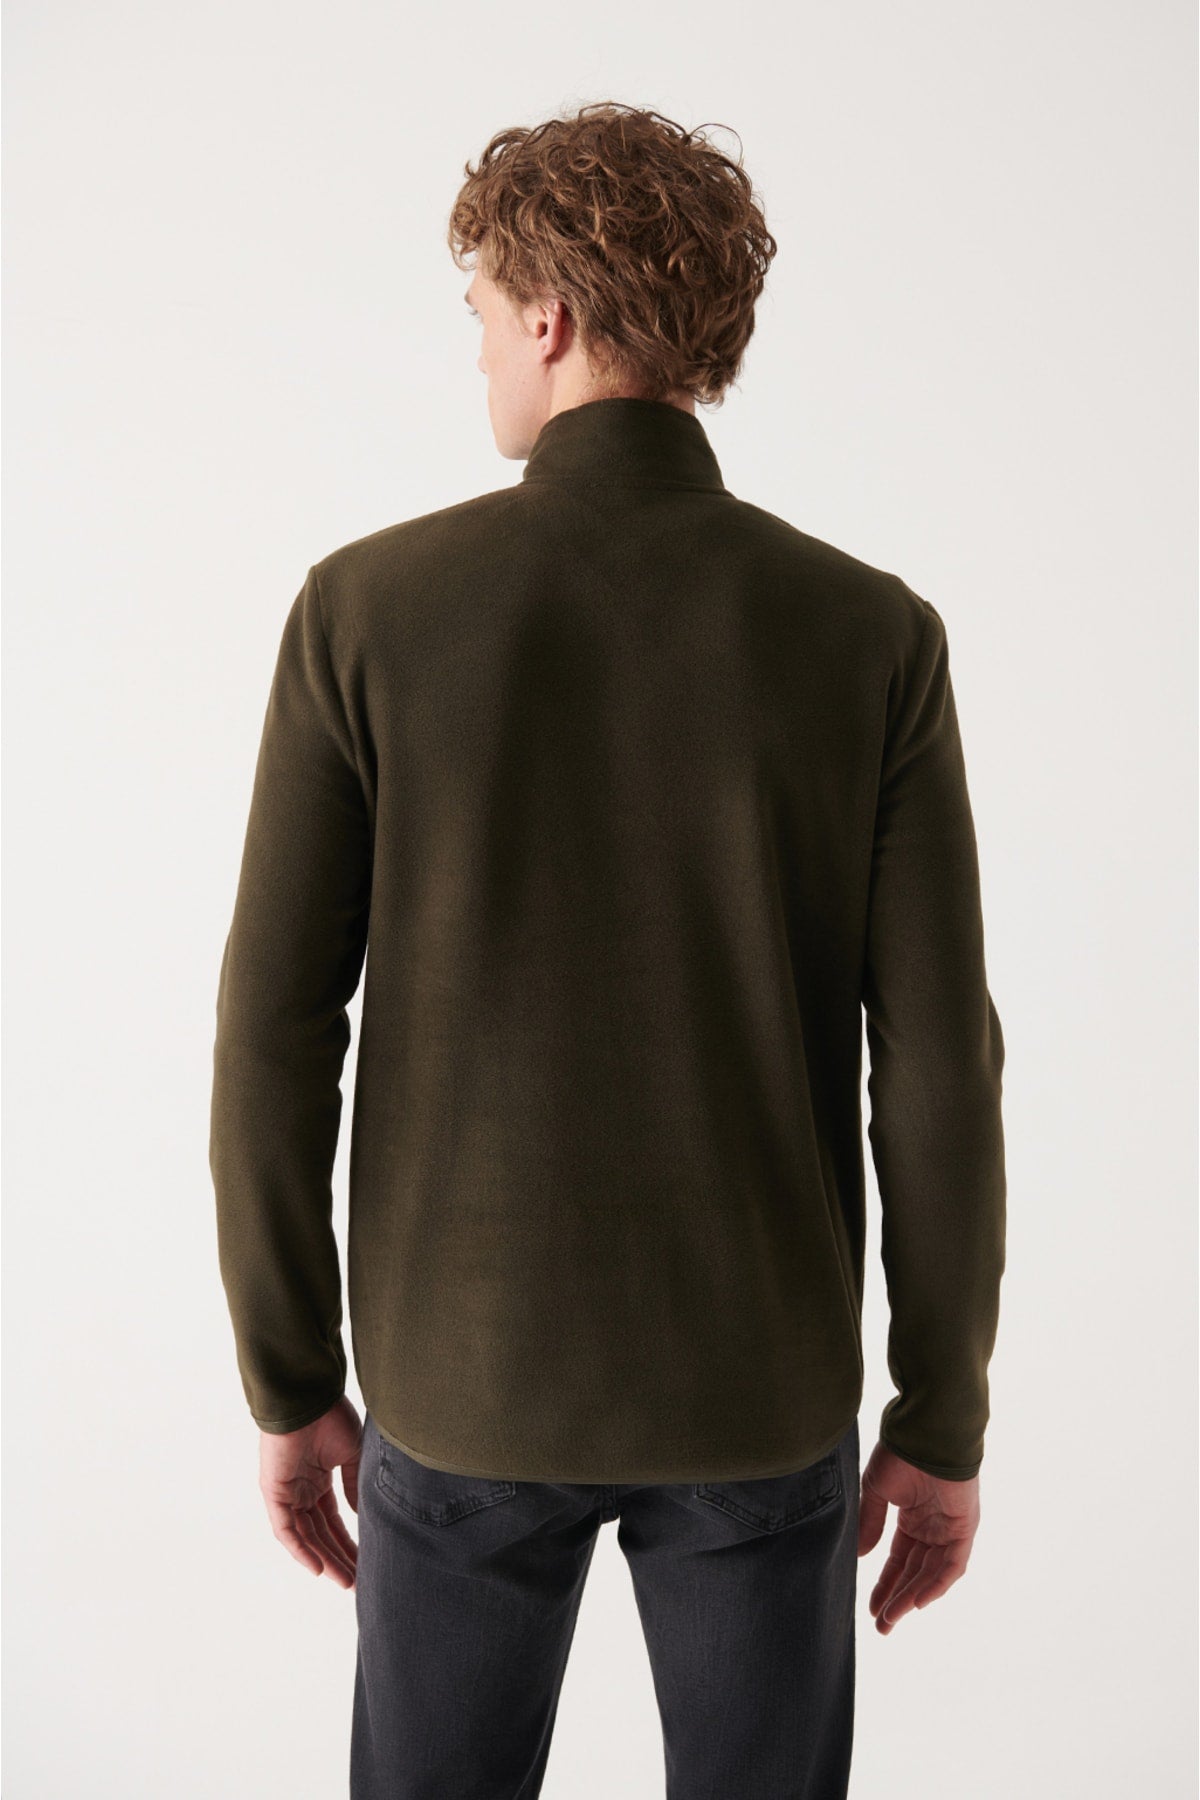 Men's Khaki Zippered upright collar parachute fabric detailed fleece sweatshirt A22y1287